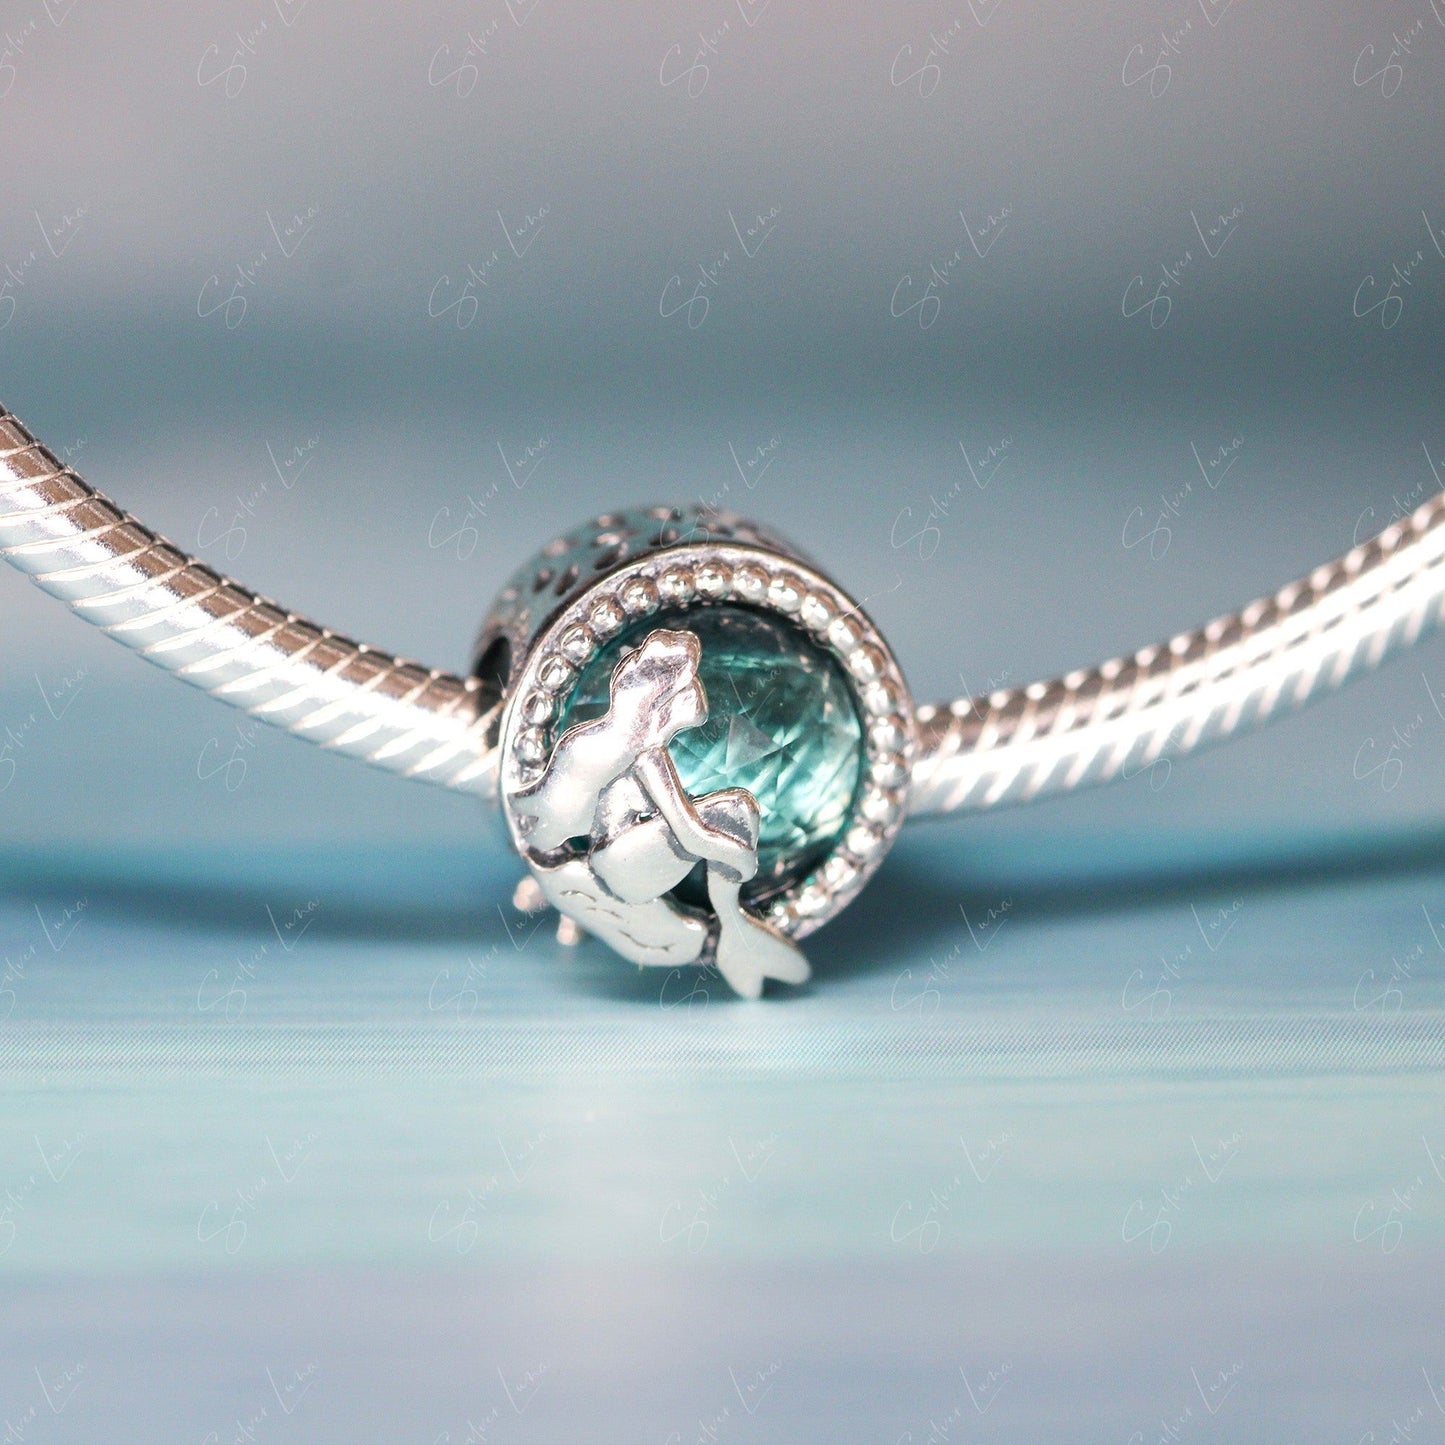 Blue mermaid glass bead charm